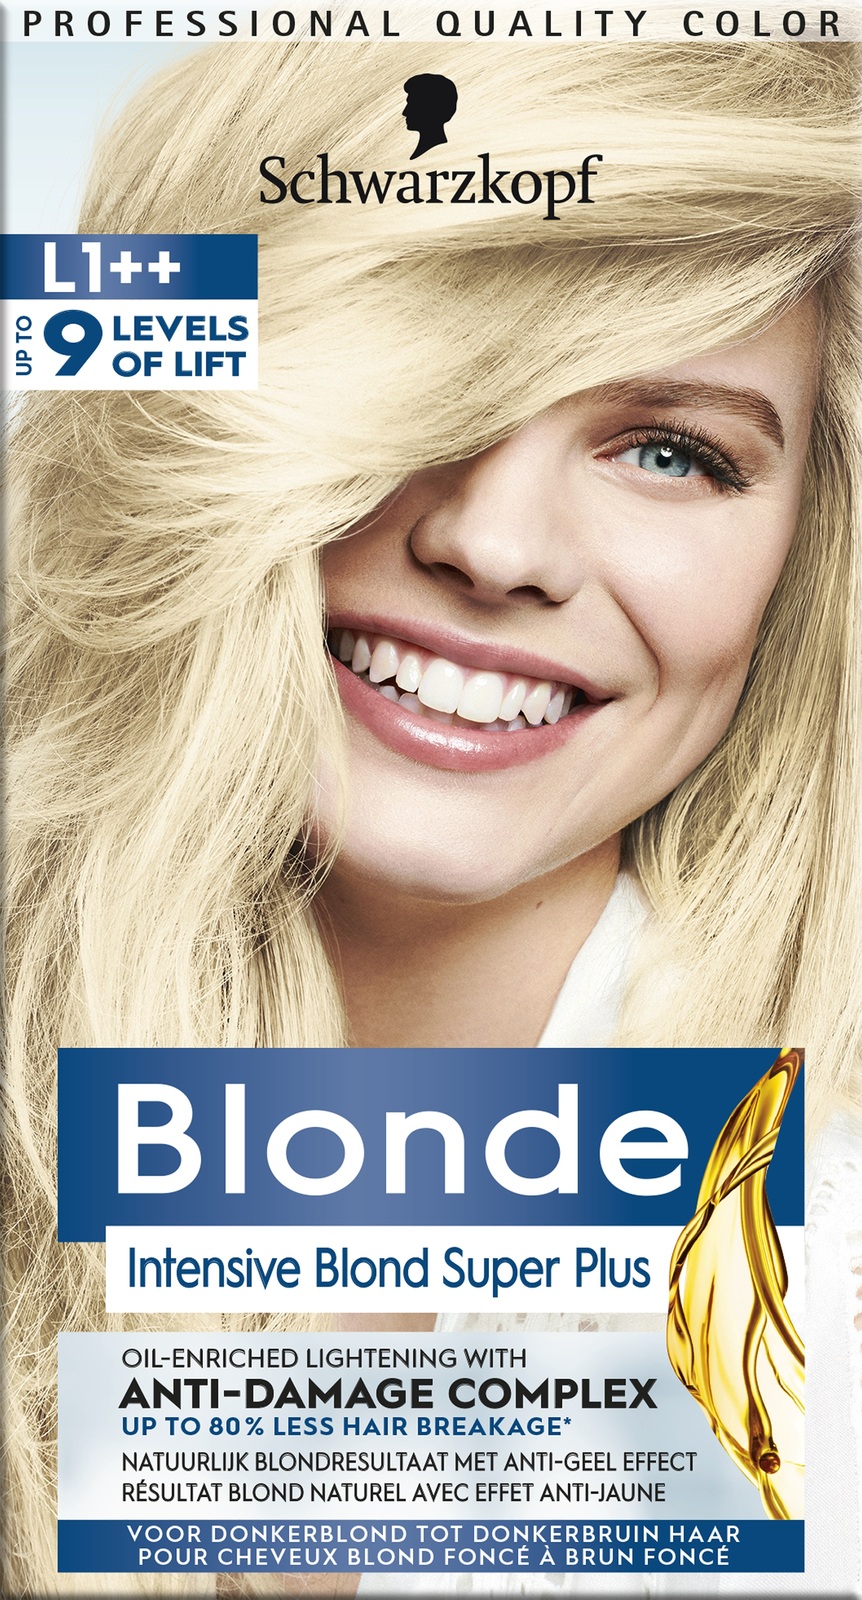 Schwarzkopf Blonde L1++ Intensive Blond Super Plus kopen